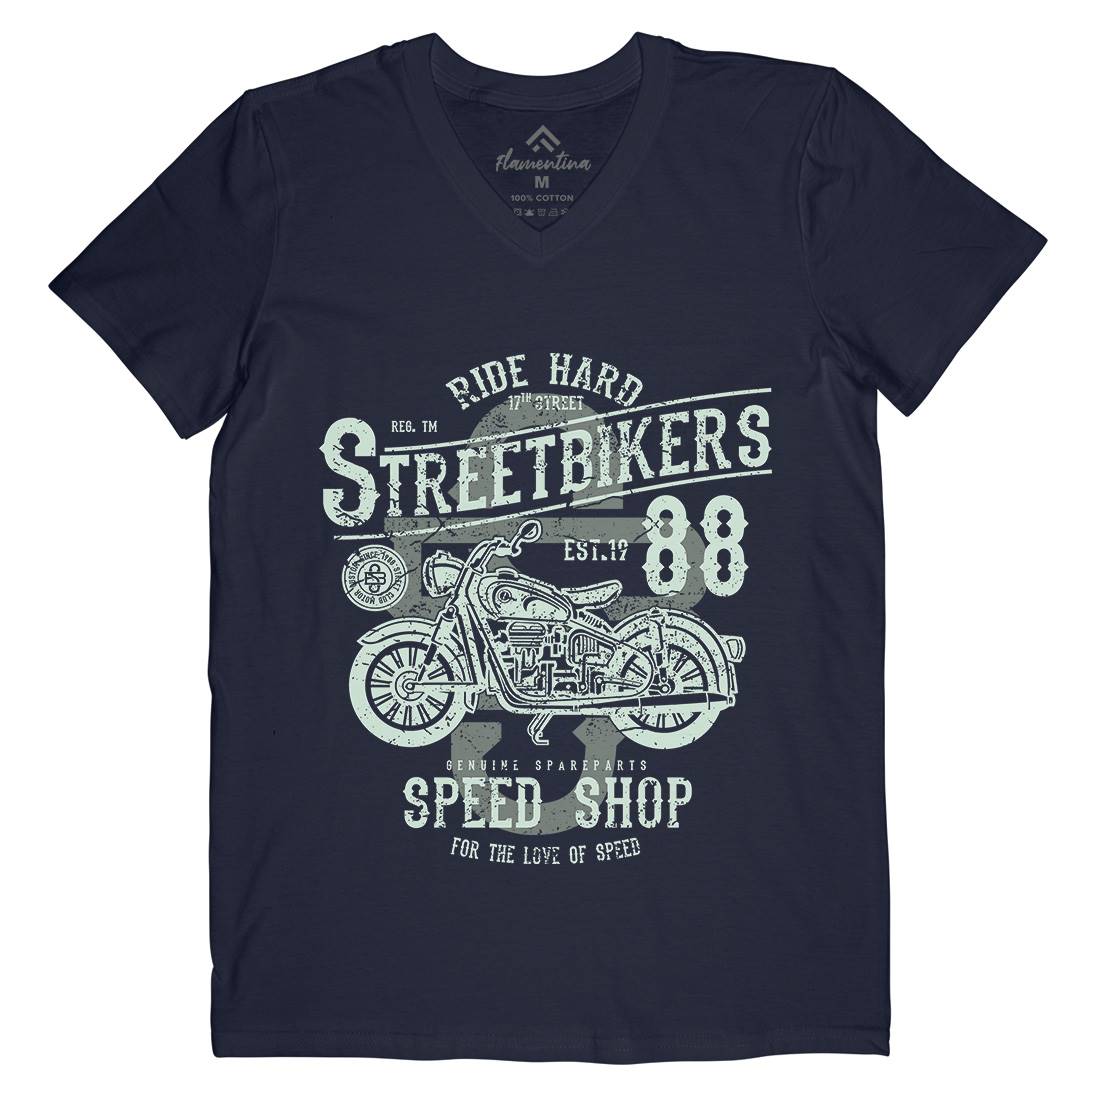 Street Bikers Mens V-Neck T-Shirt Motorcycles A160